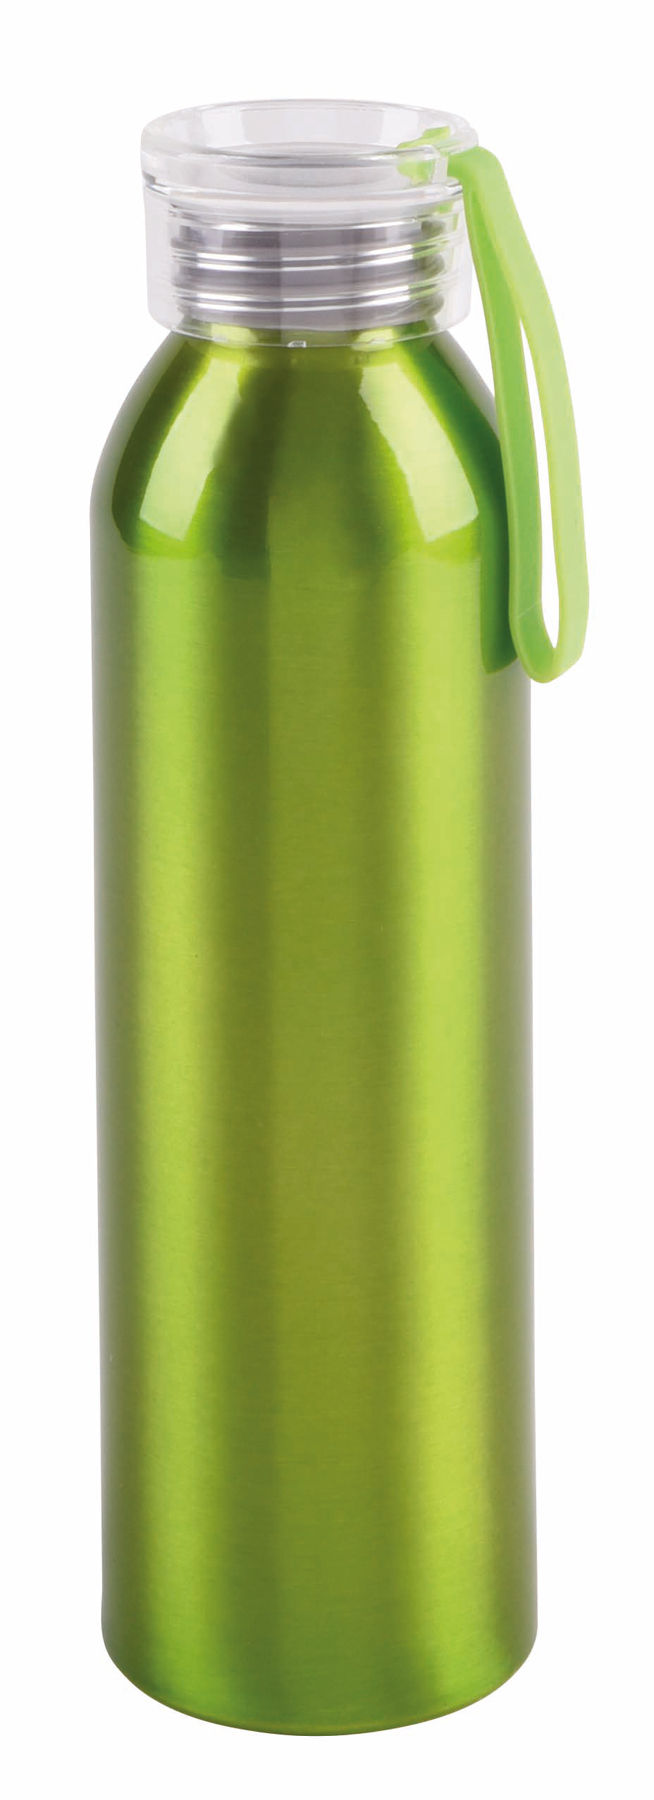 Aluminiowa butelka LOOPED, pojemność ok. 650 ml.